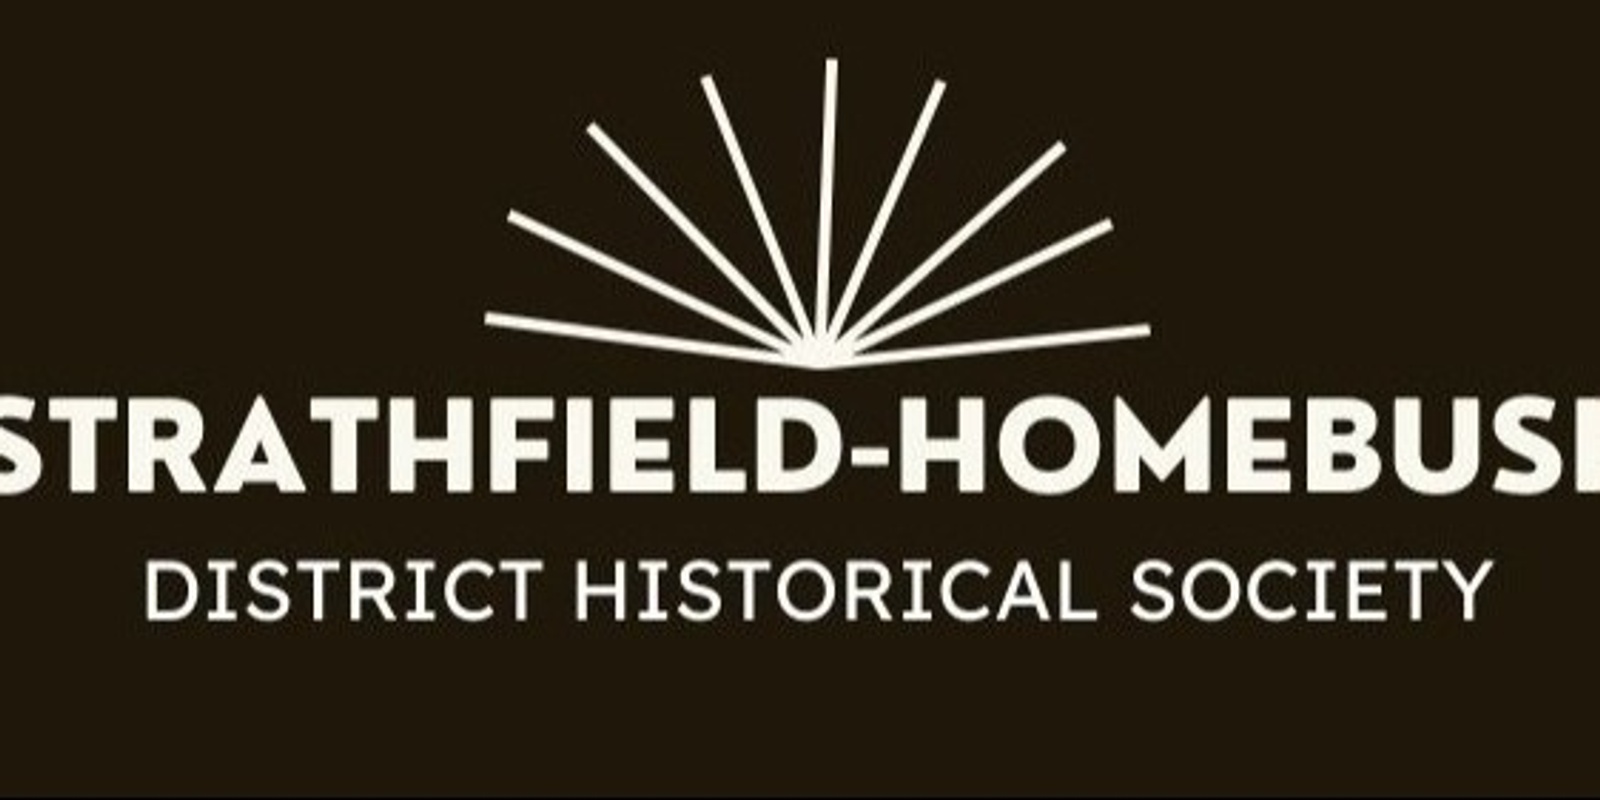 Strathfield District Historical Society's banner